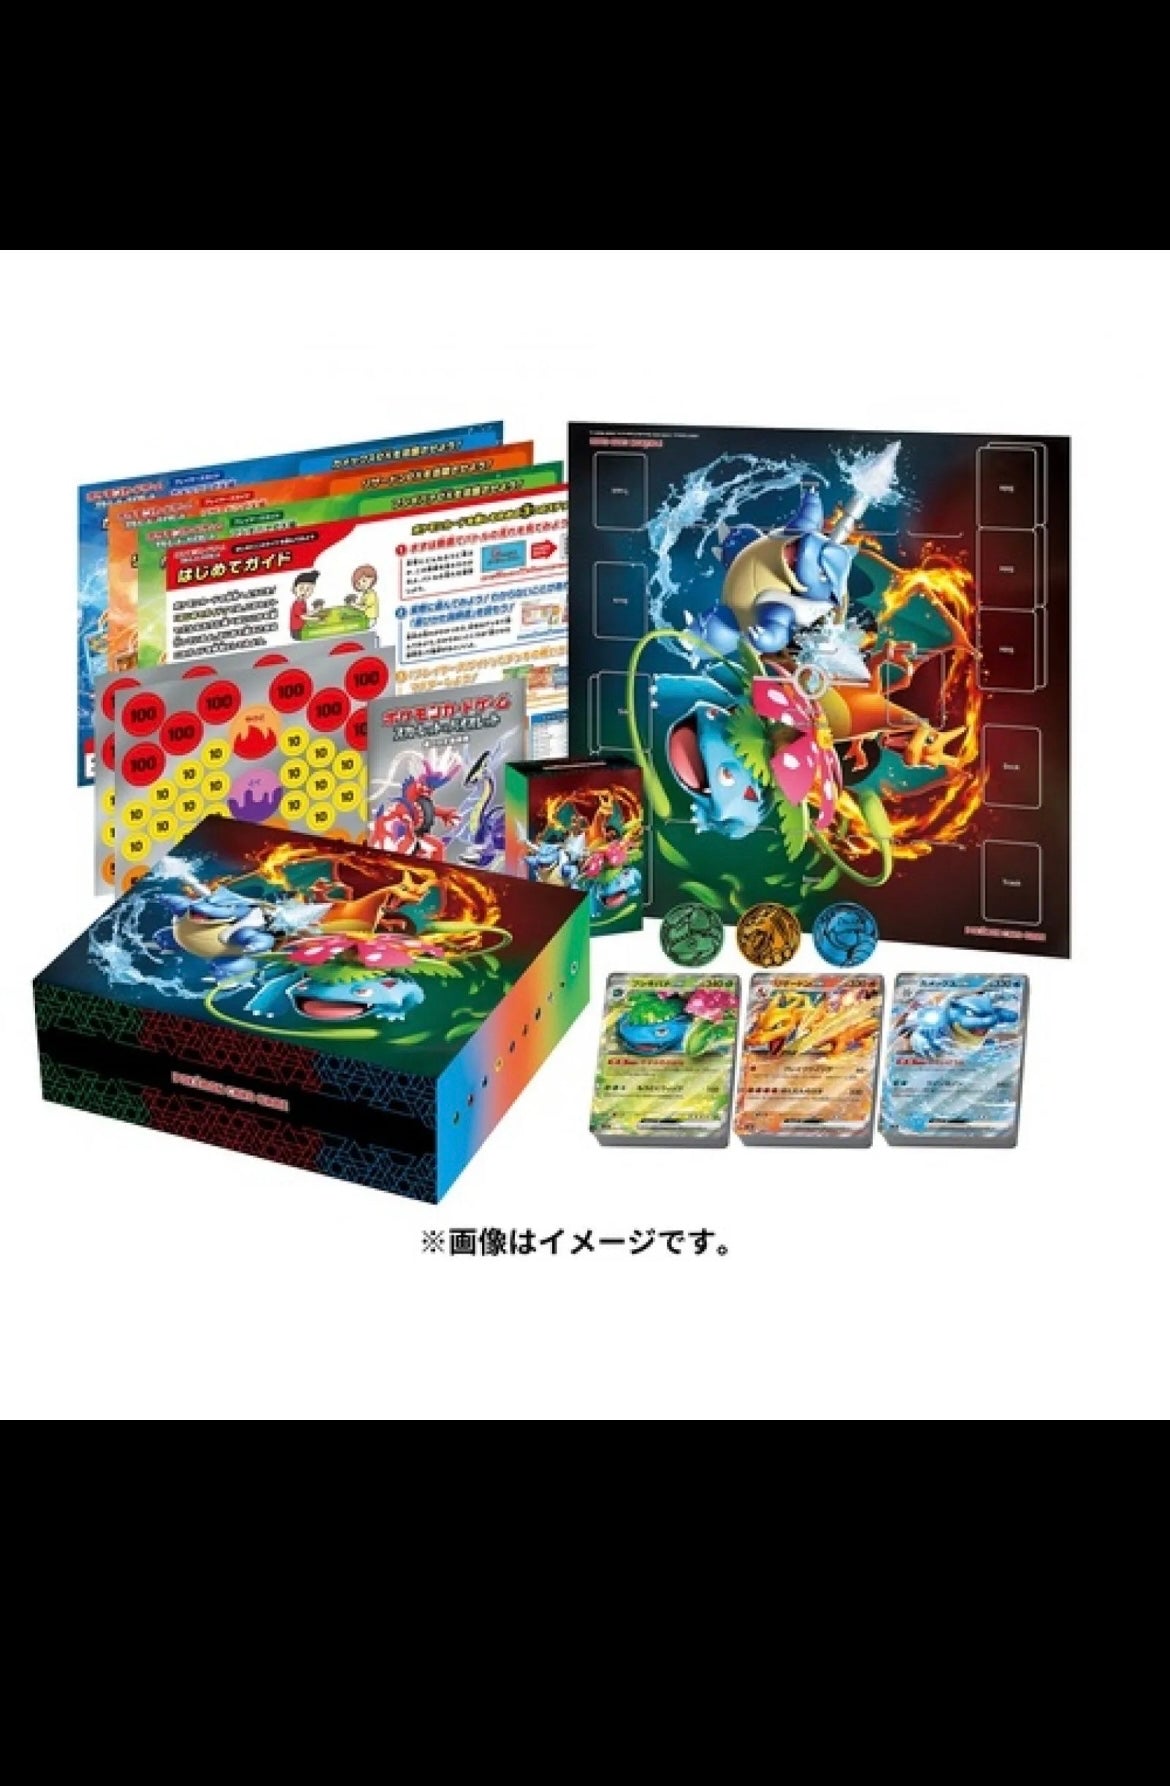 Pokemon Card Game Special Deck Set Ex Venusaur, Charizard & Blastoise TCG JAPAN